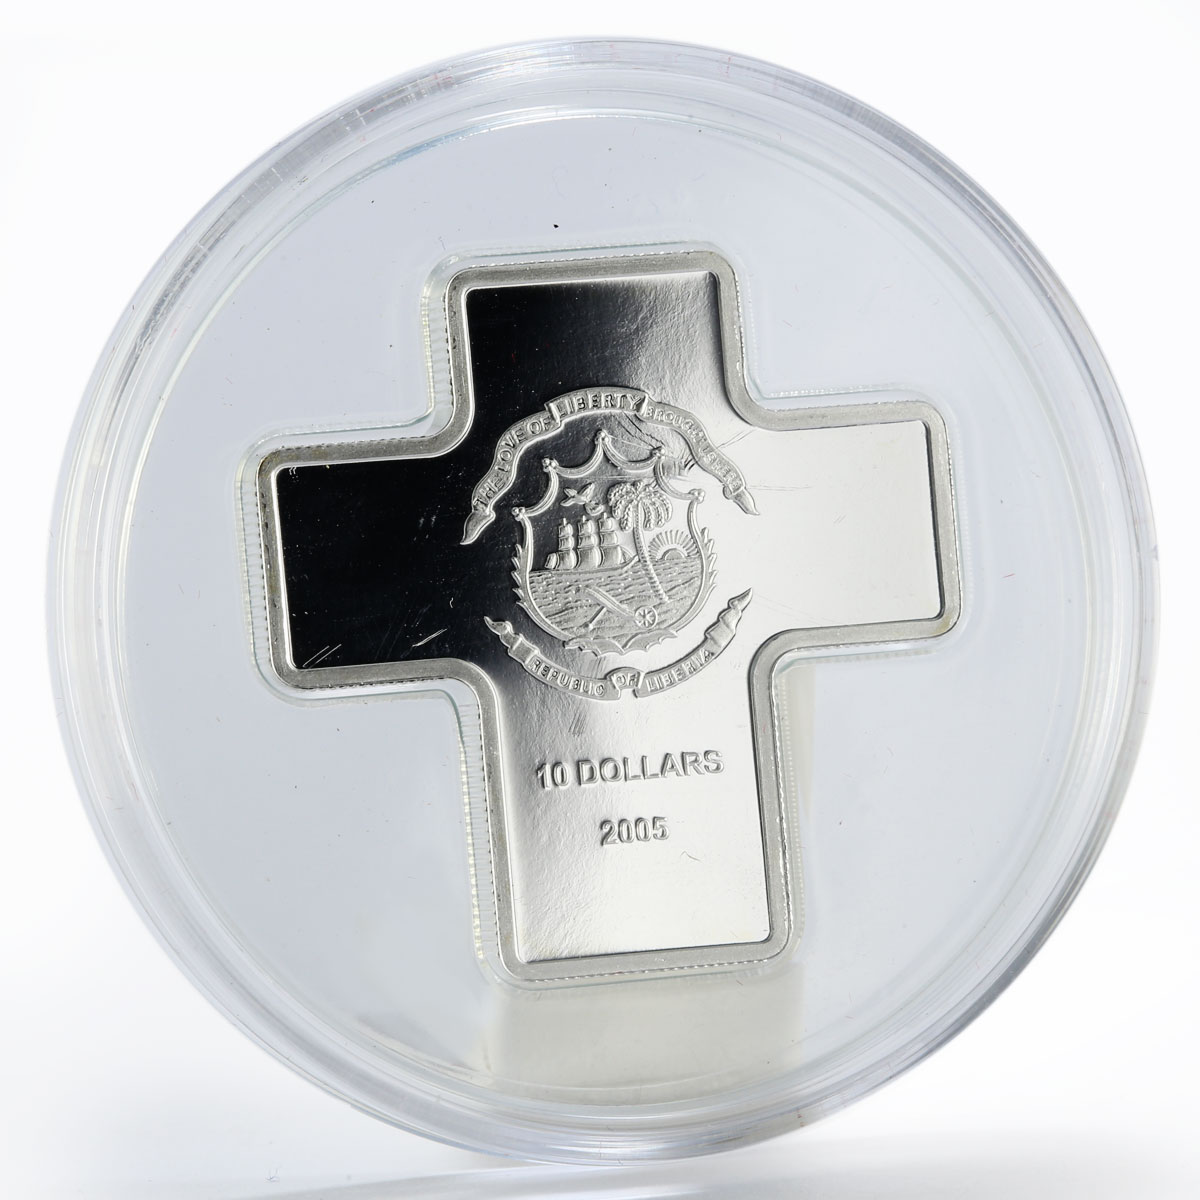 Liberia 10 dollars Karol Wojtyla cross crystal gilded silver proof coin 2005